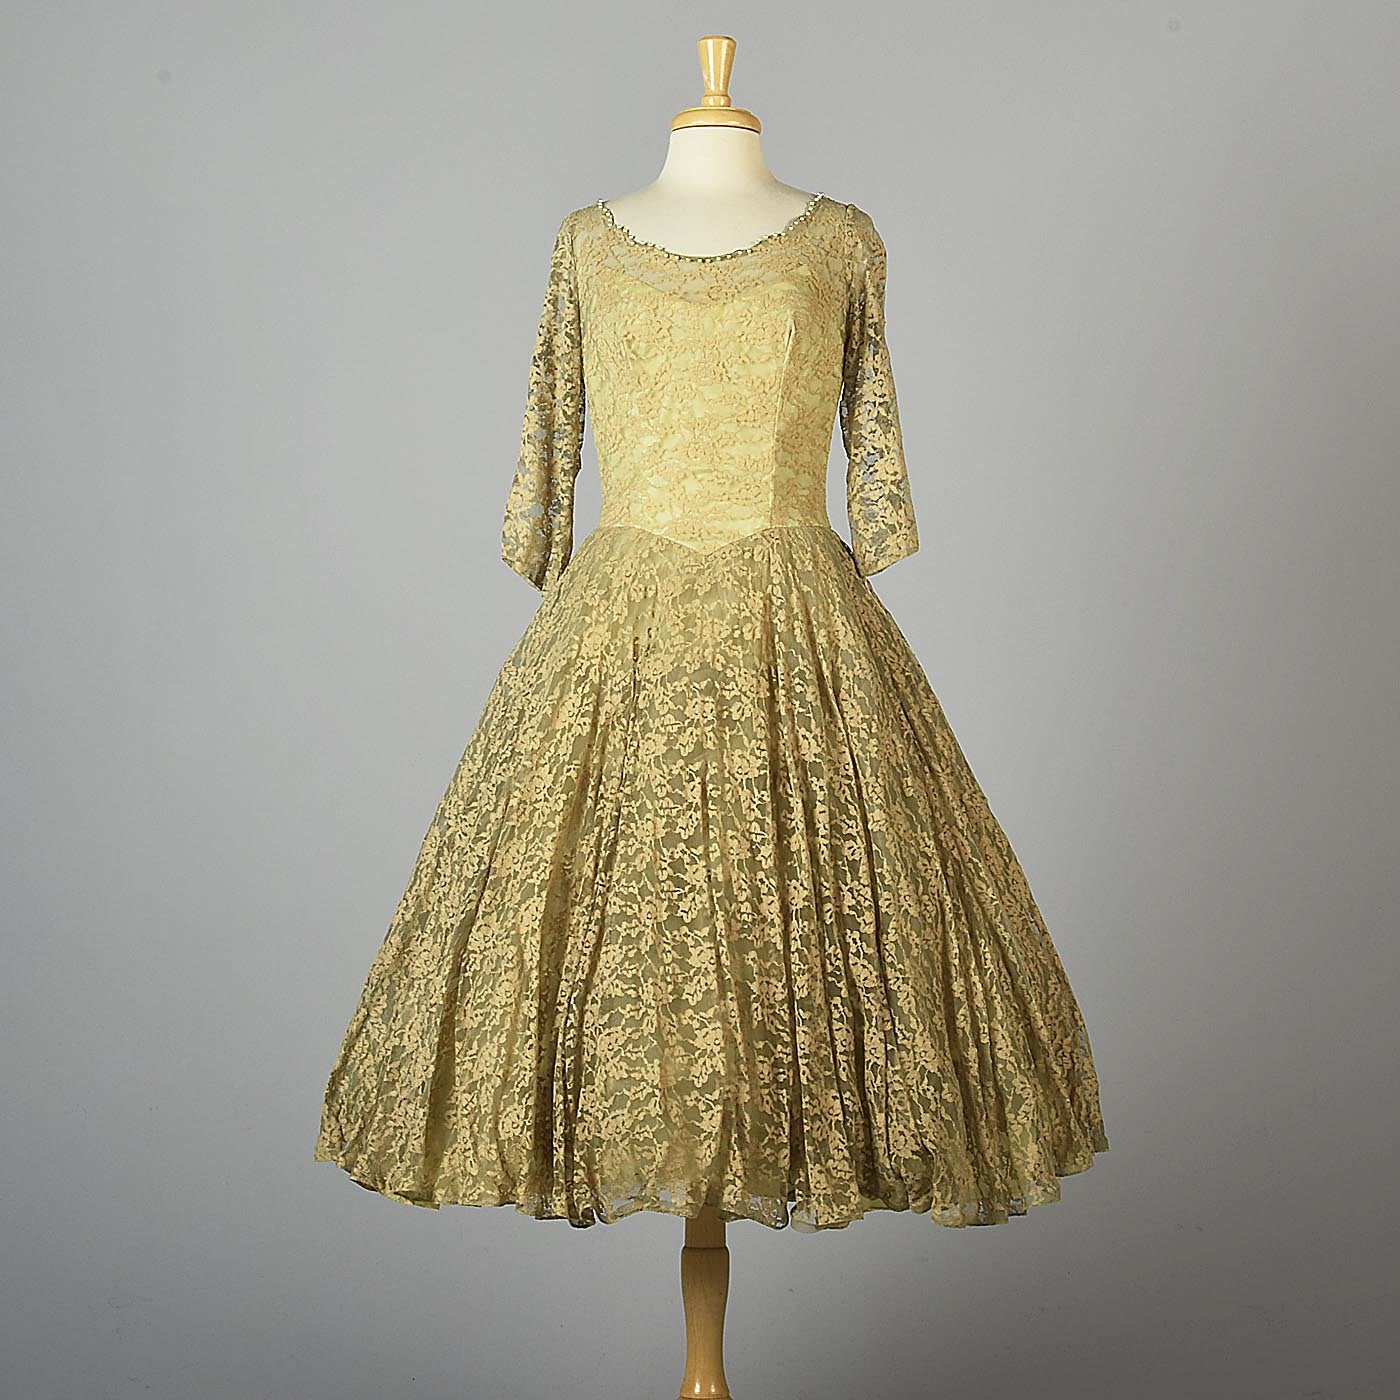 1950s Emma Domb Lace Party Dress